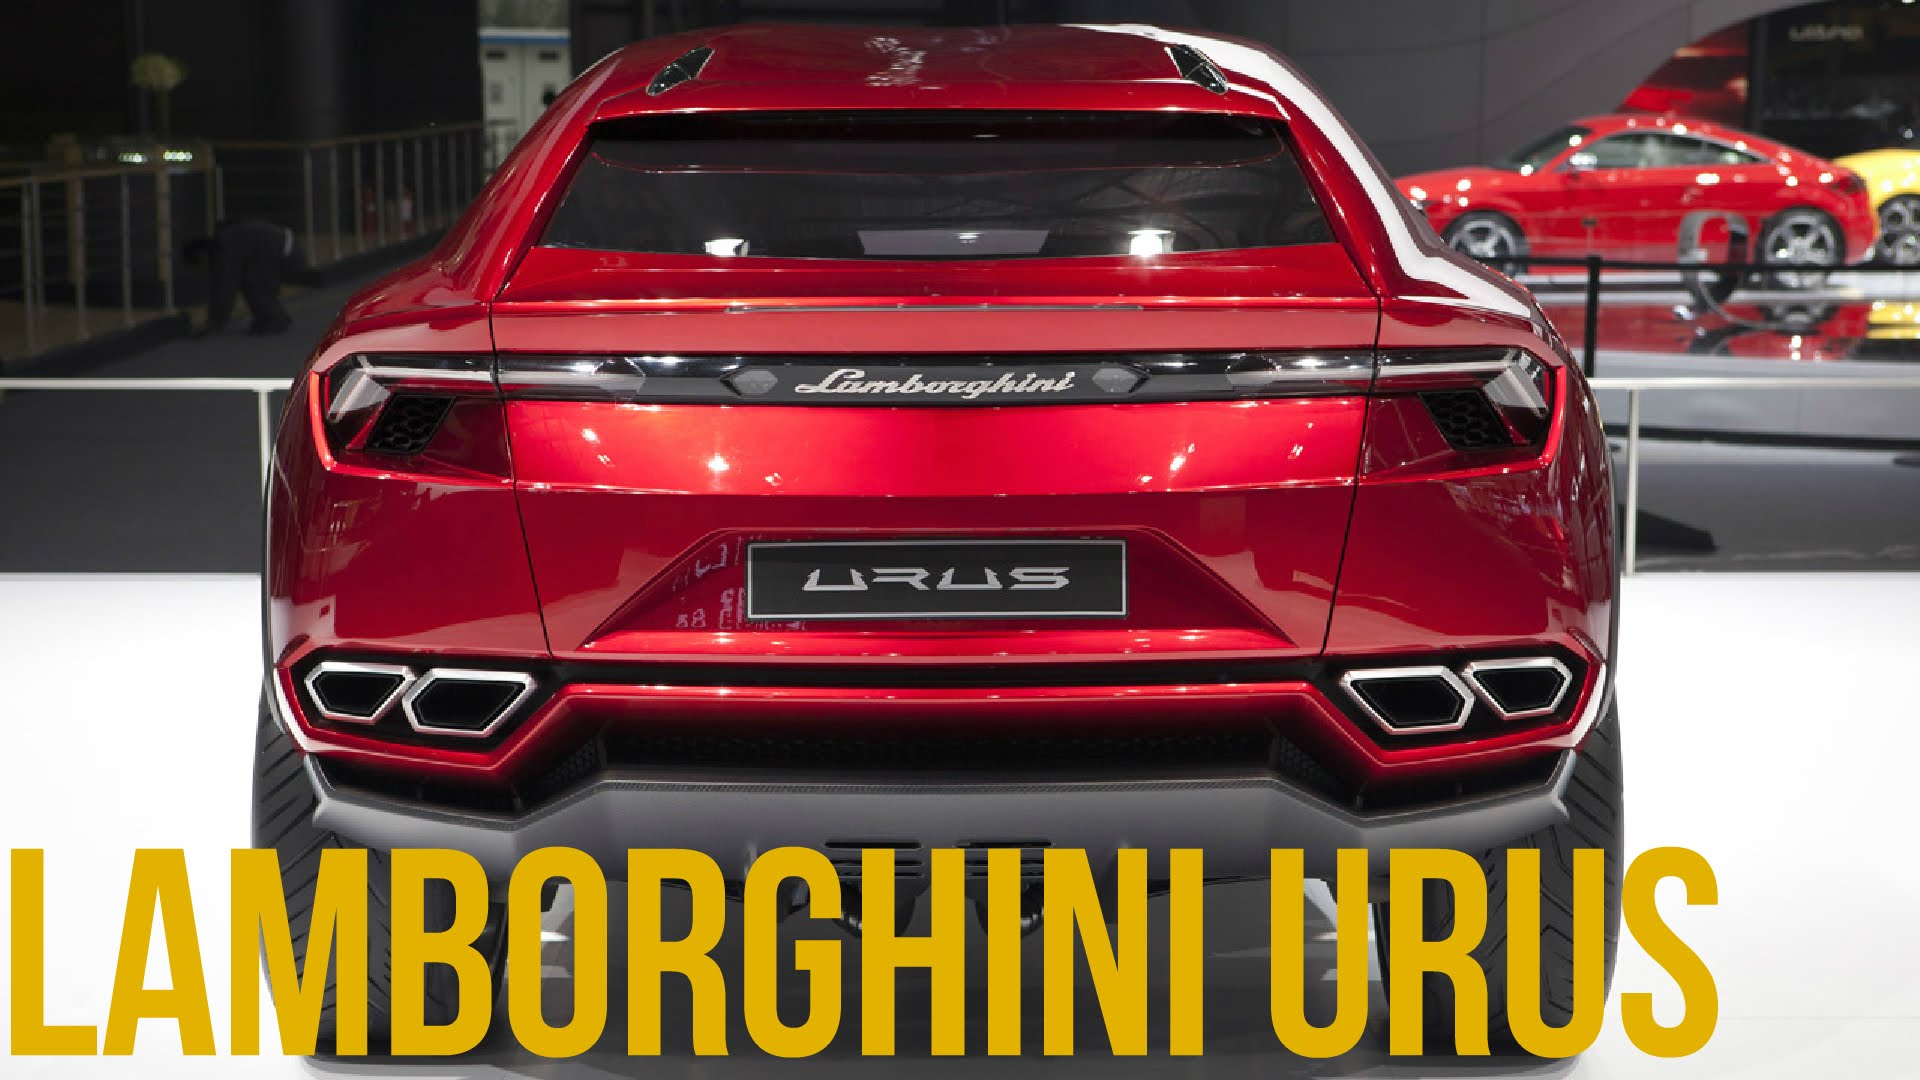 Lamborghini Urus Backgrounds on Wallpapers Vista